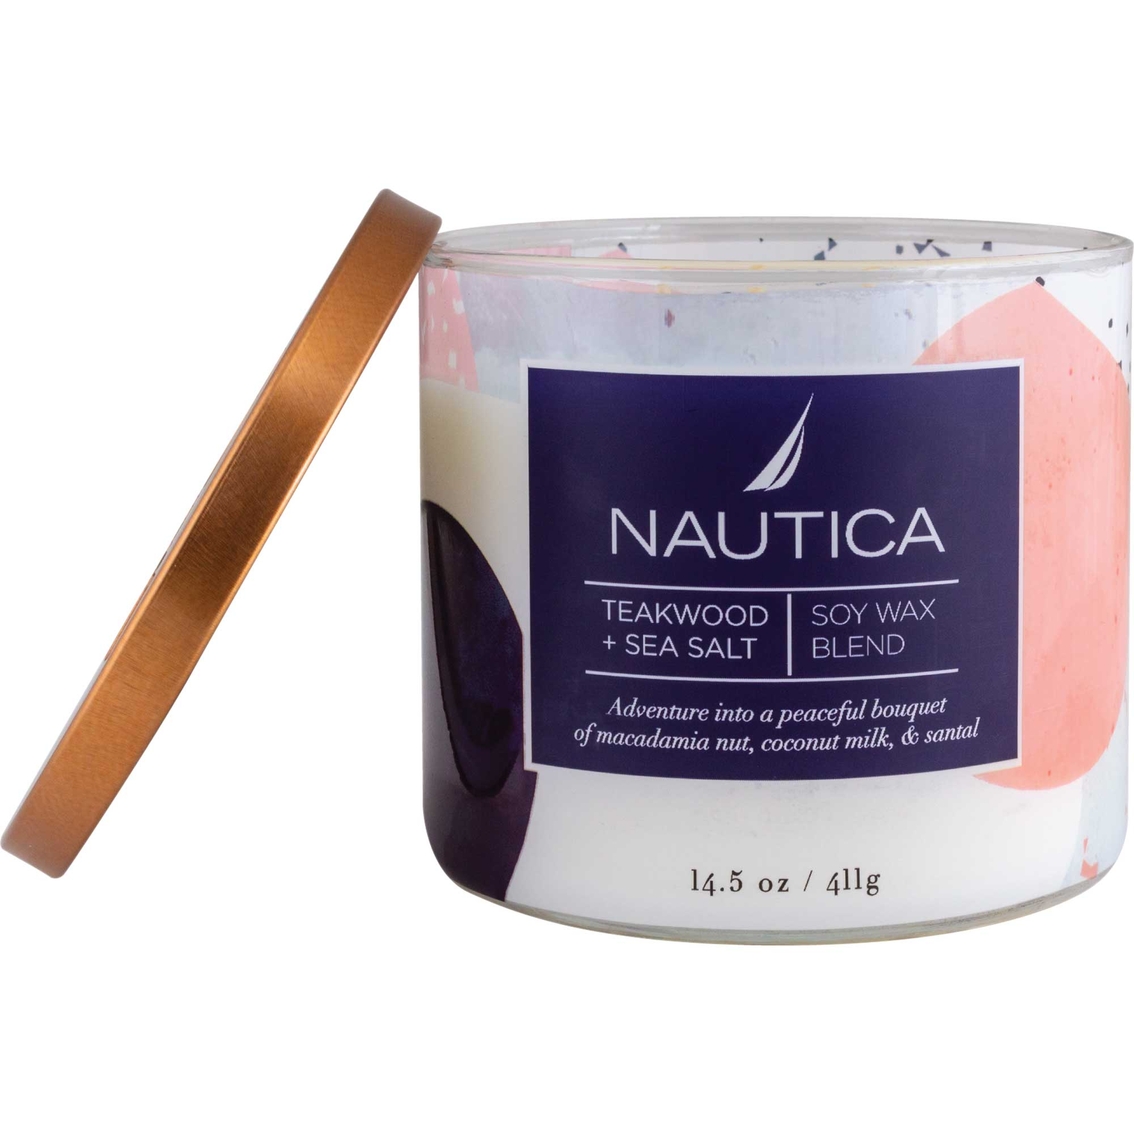 Nautica Teakwood and Sea Salt 3 Wick Jar Candle - Image 2 of 3